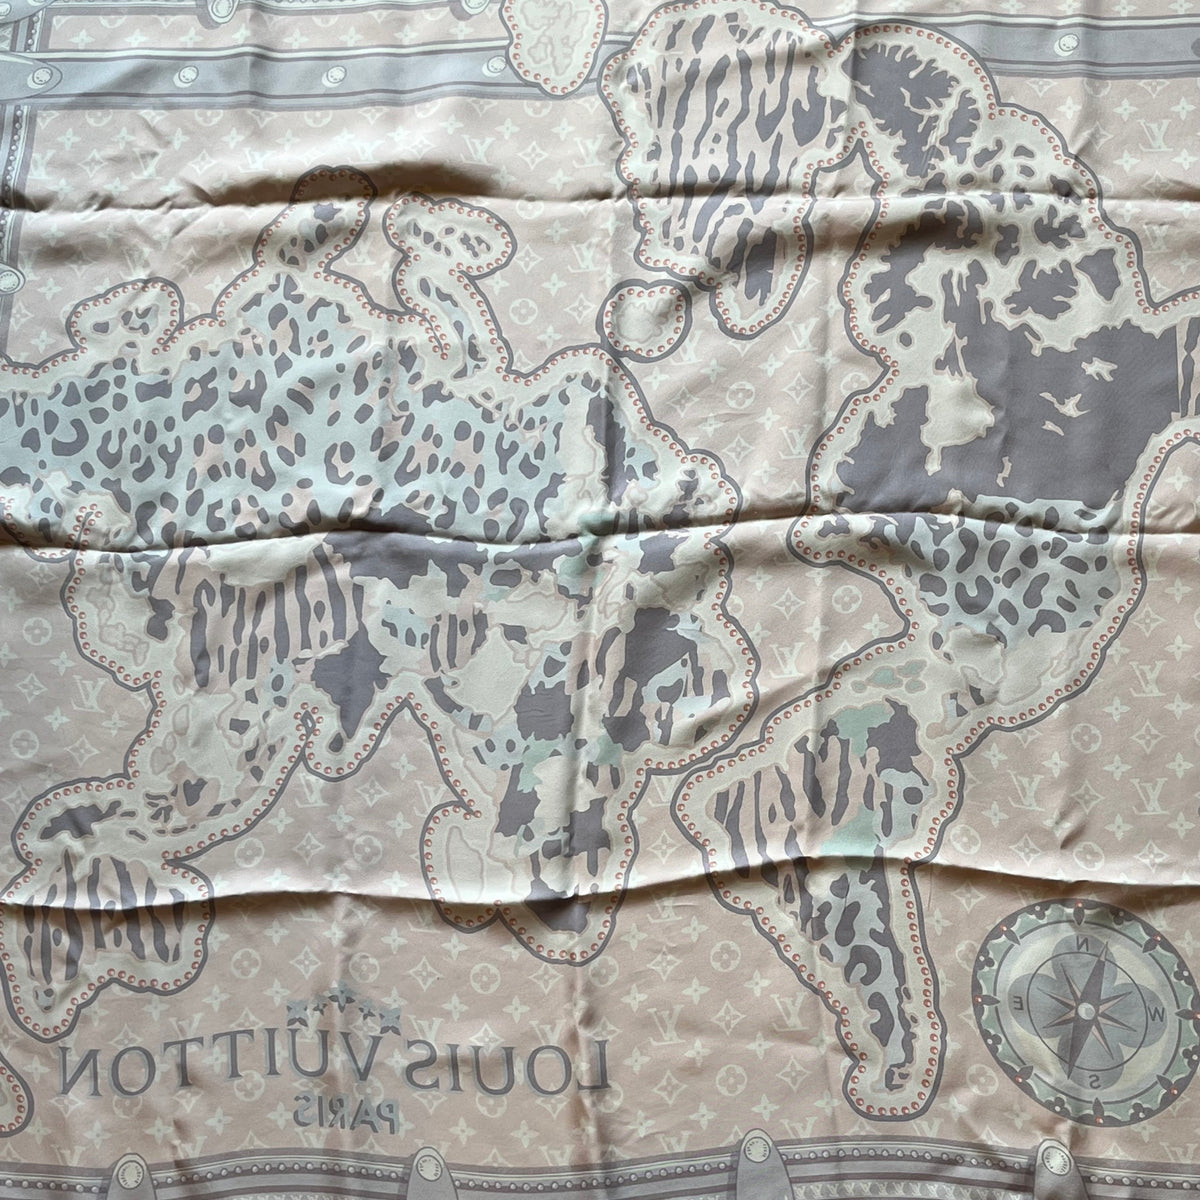 LOUIS VUITTON Pink/Lavender Silk Monogram Map Square Scarf